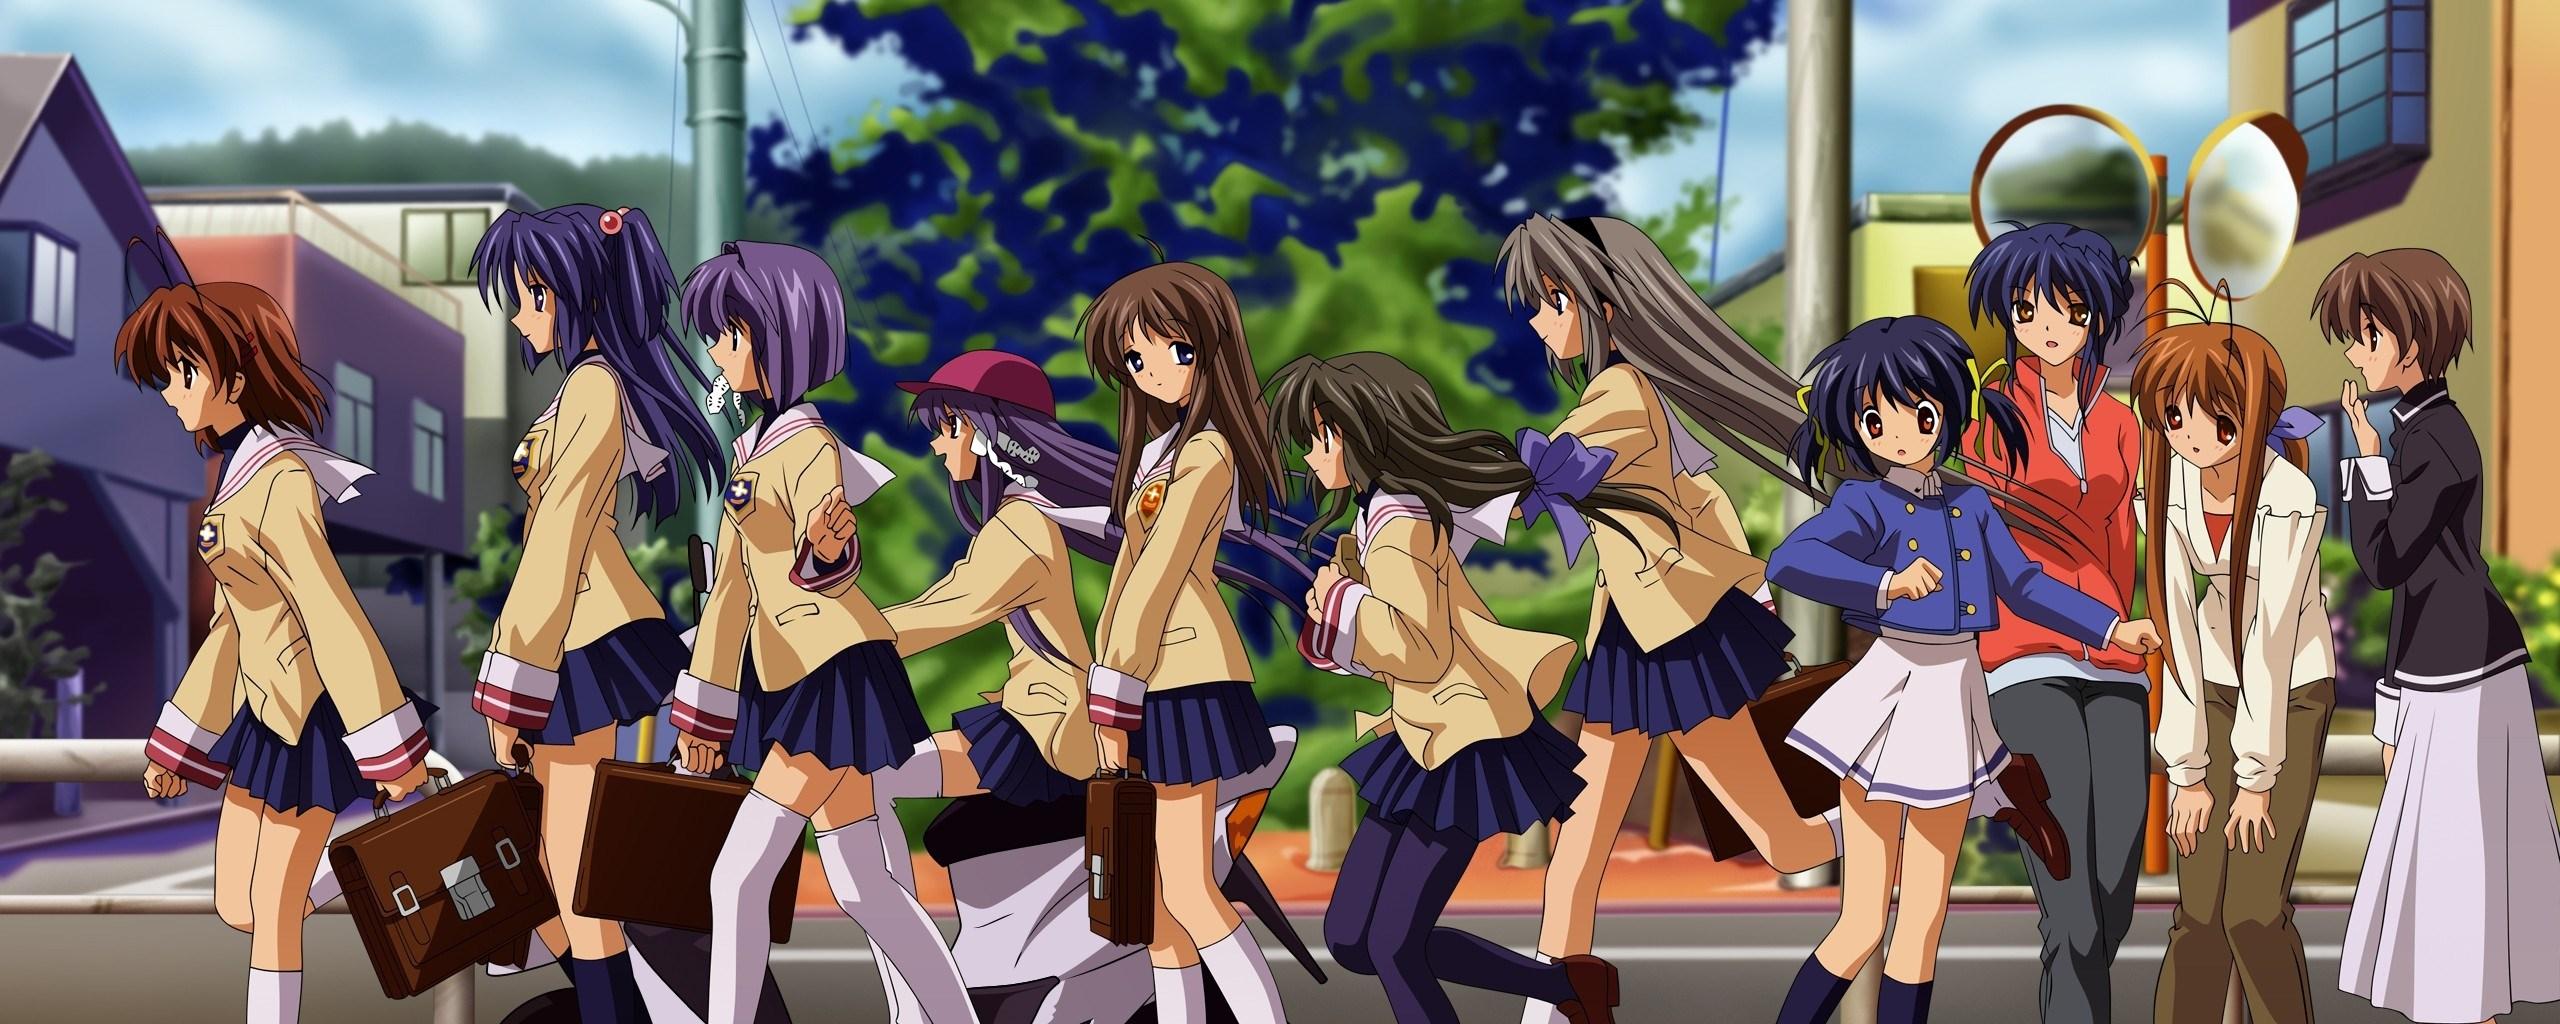 Anime Group Of Friends Walking, HD Wallpaper & background